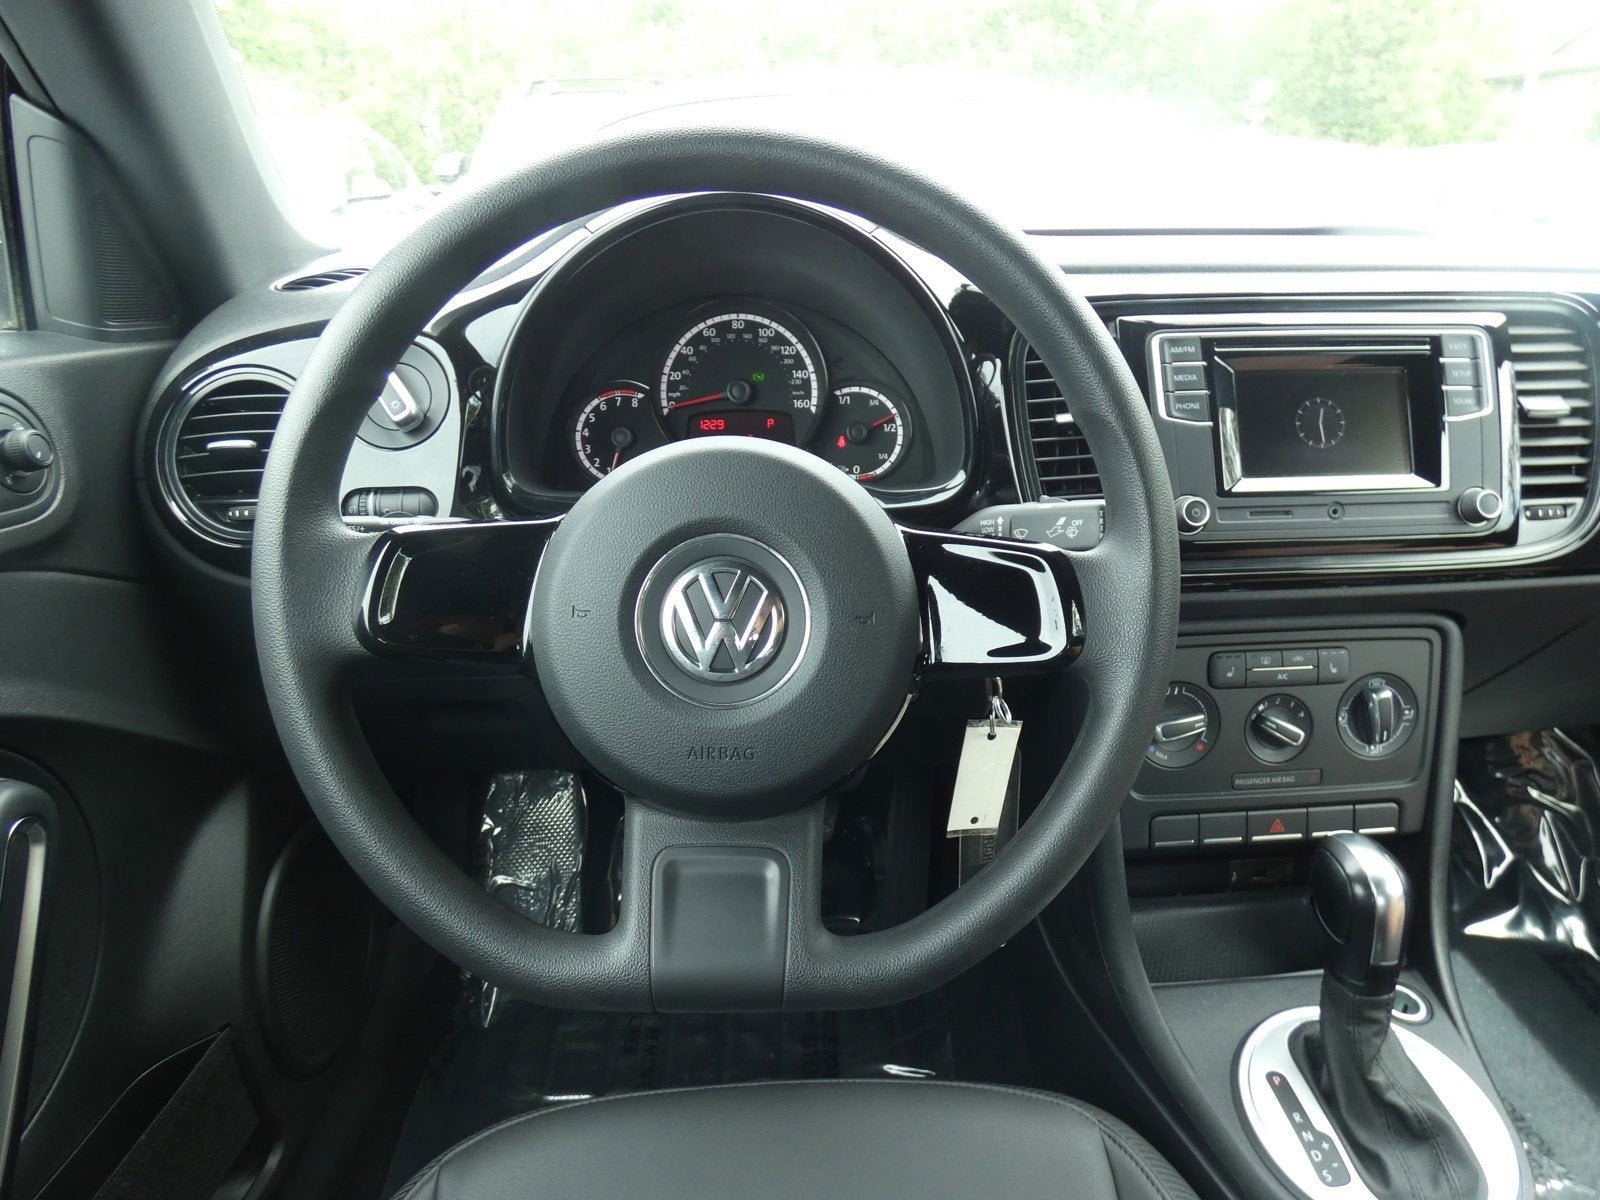 2016 Volkswagen Beetle 1.8T Wolfsburg Edition